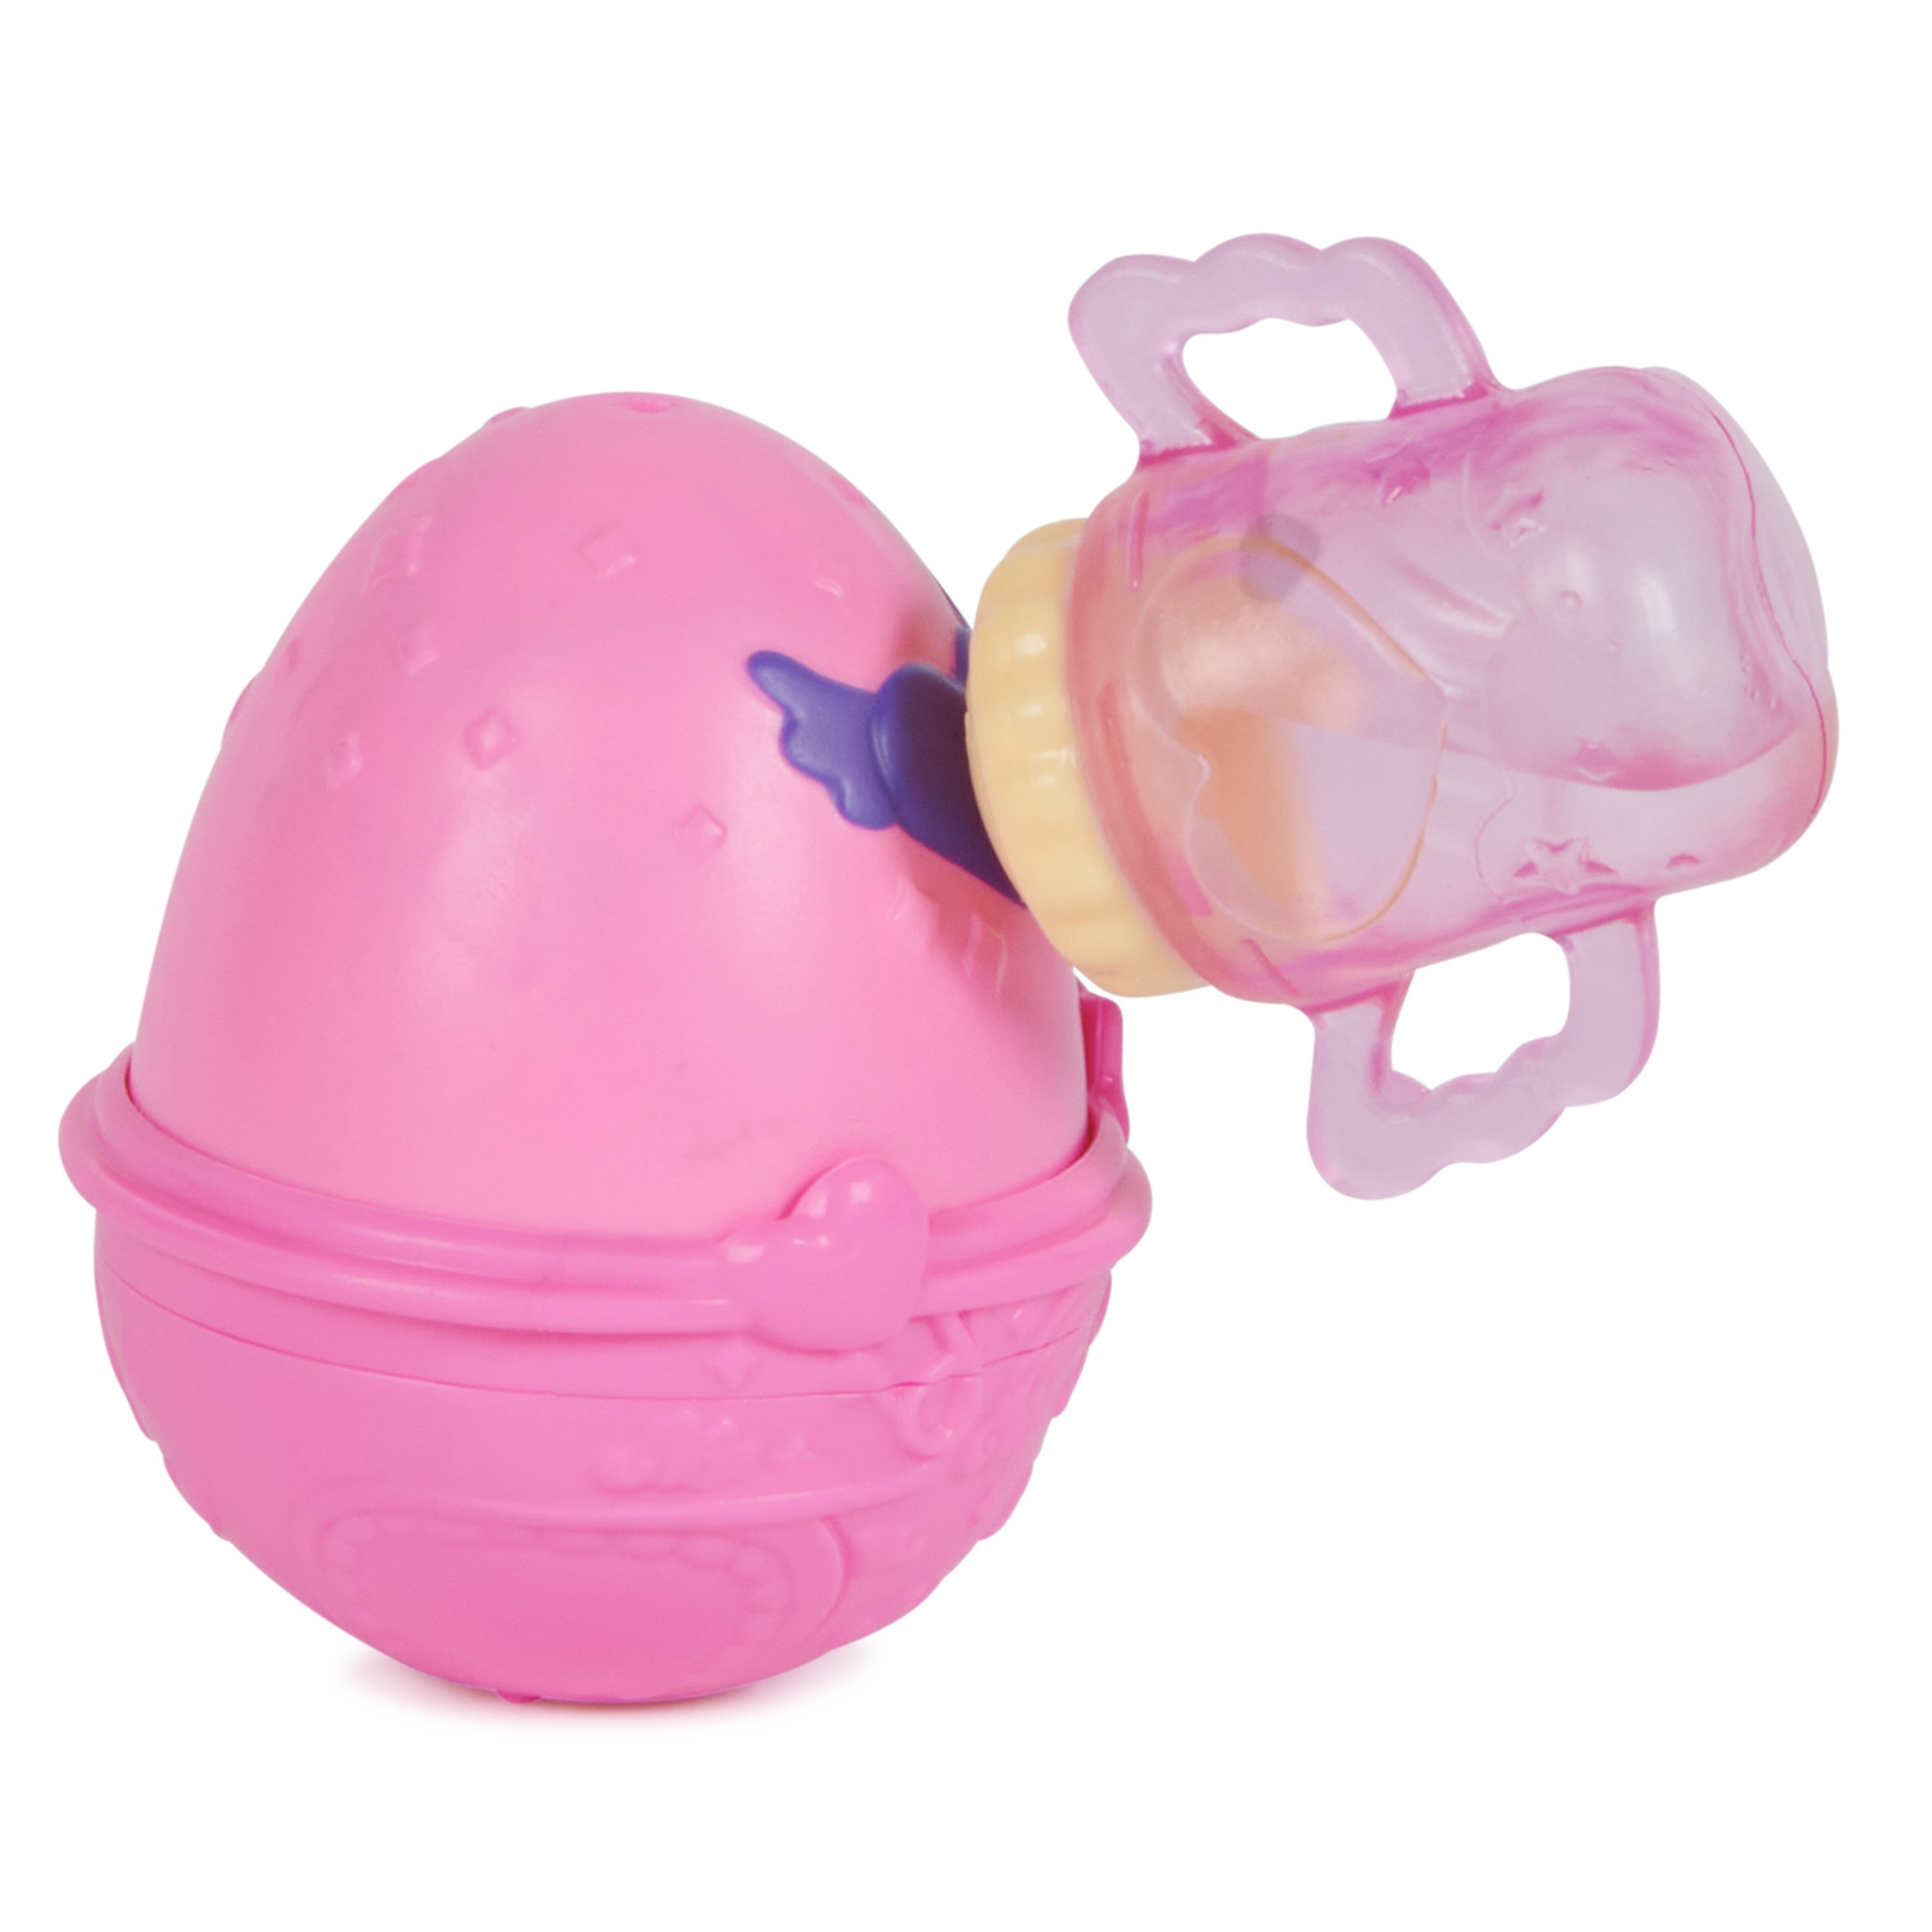 Hatchimals Pengualas Pink And Teal Egg - Shop Playsets at H-E-B